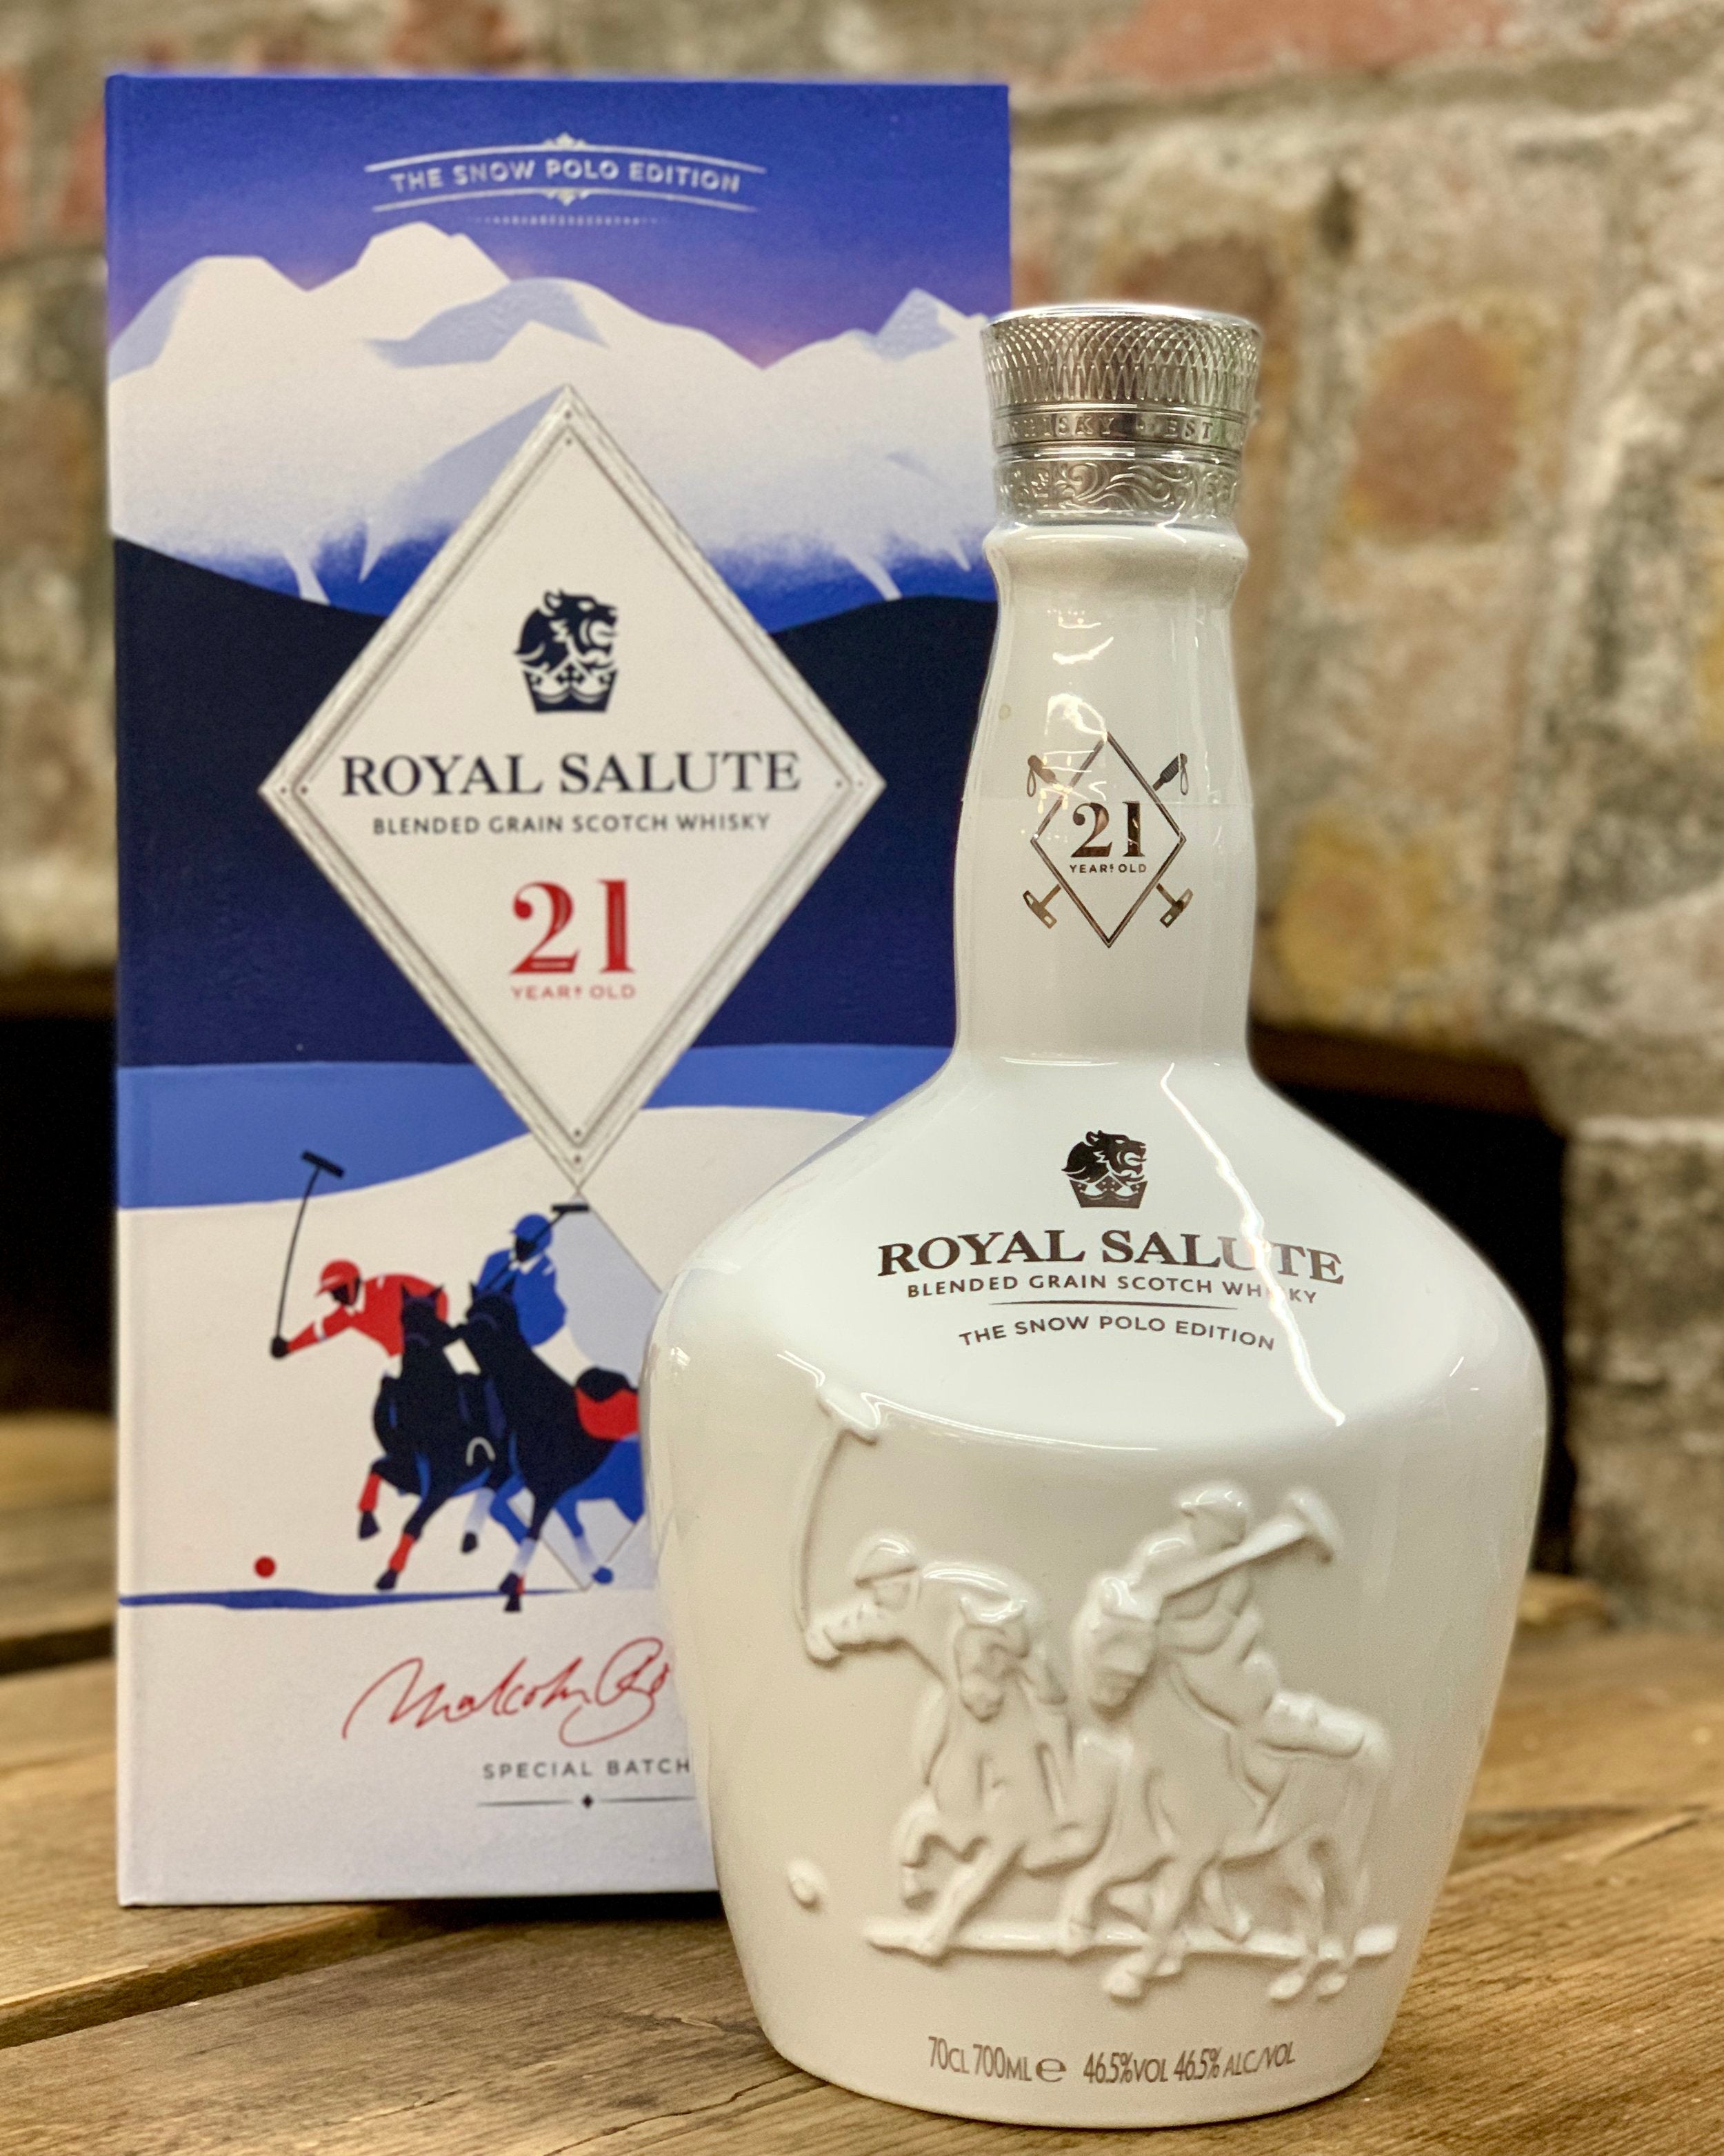 Royal Salute Snow Polo single grain scotch whisky